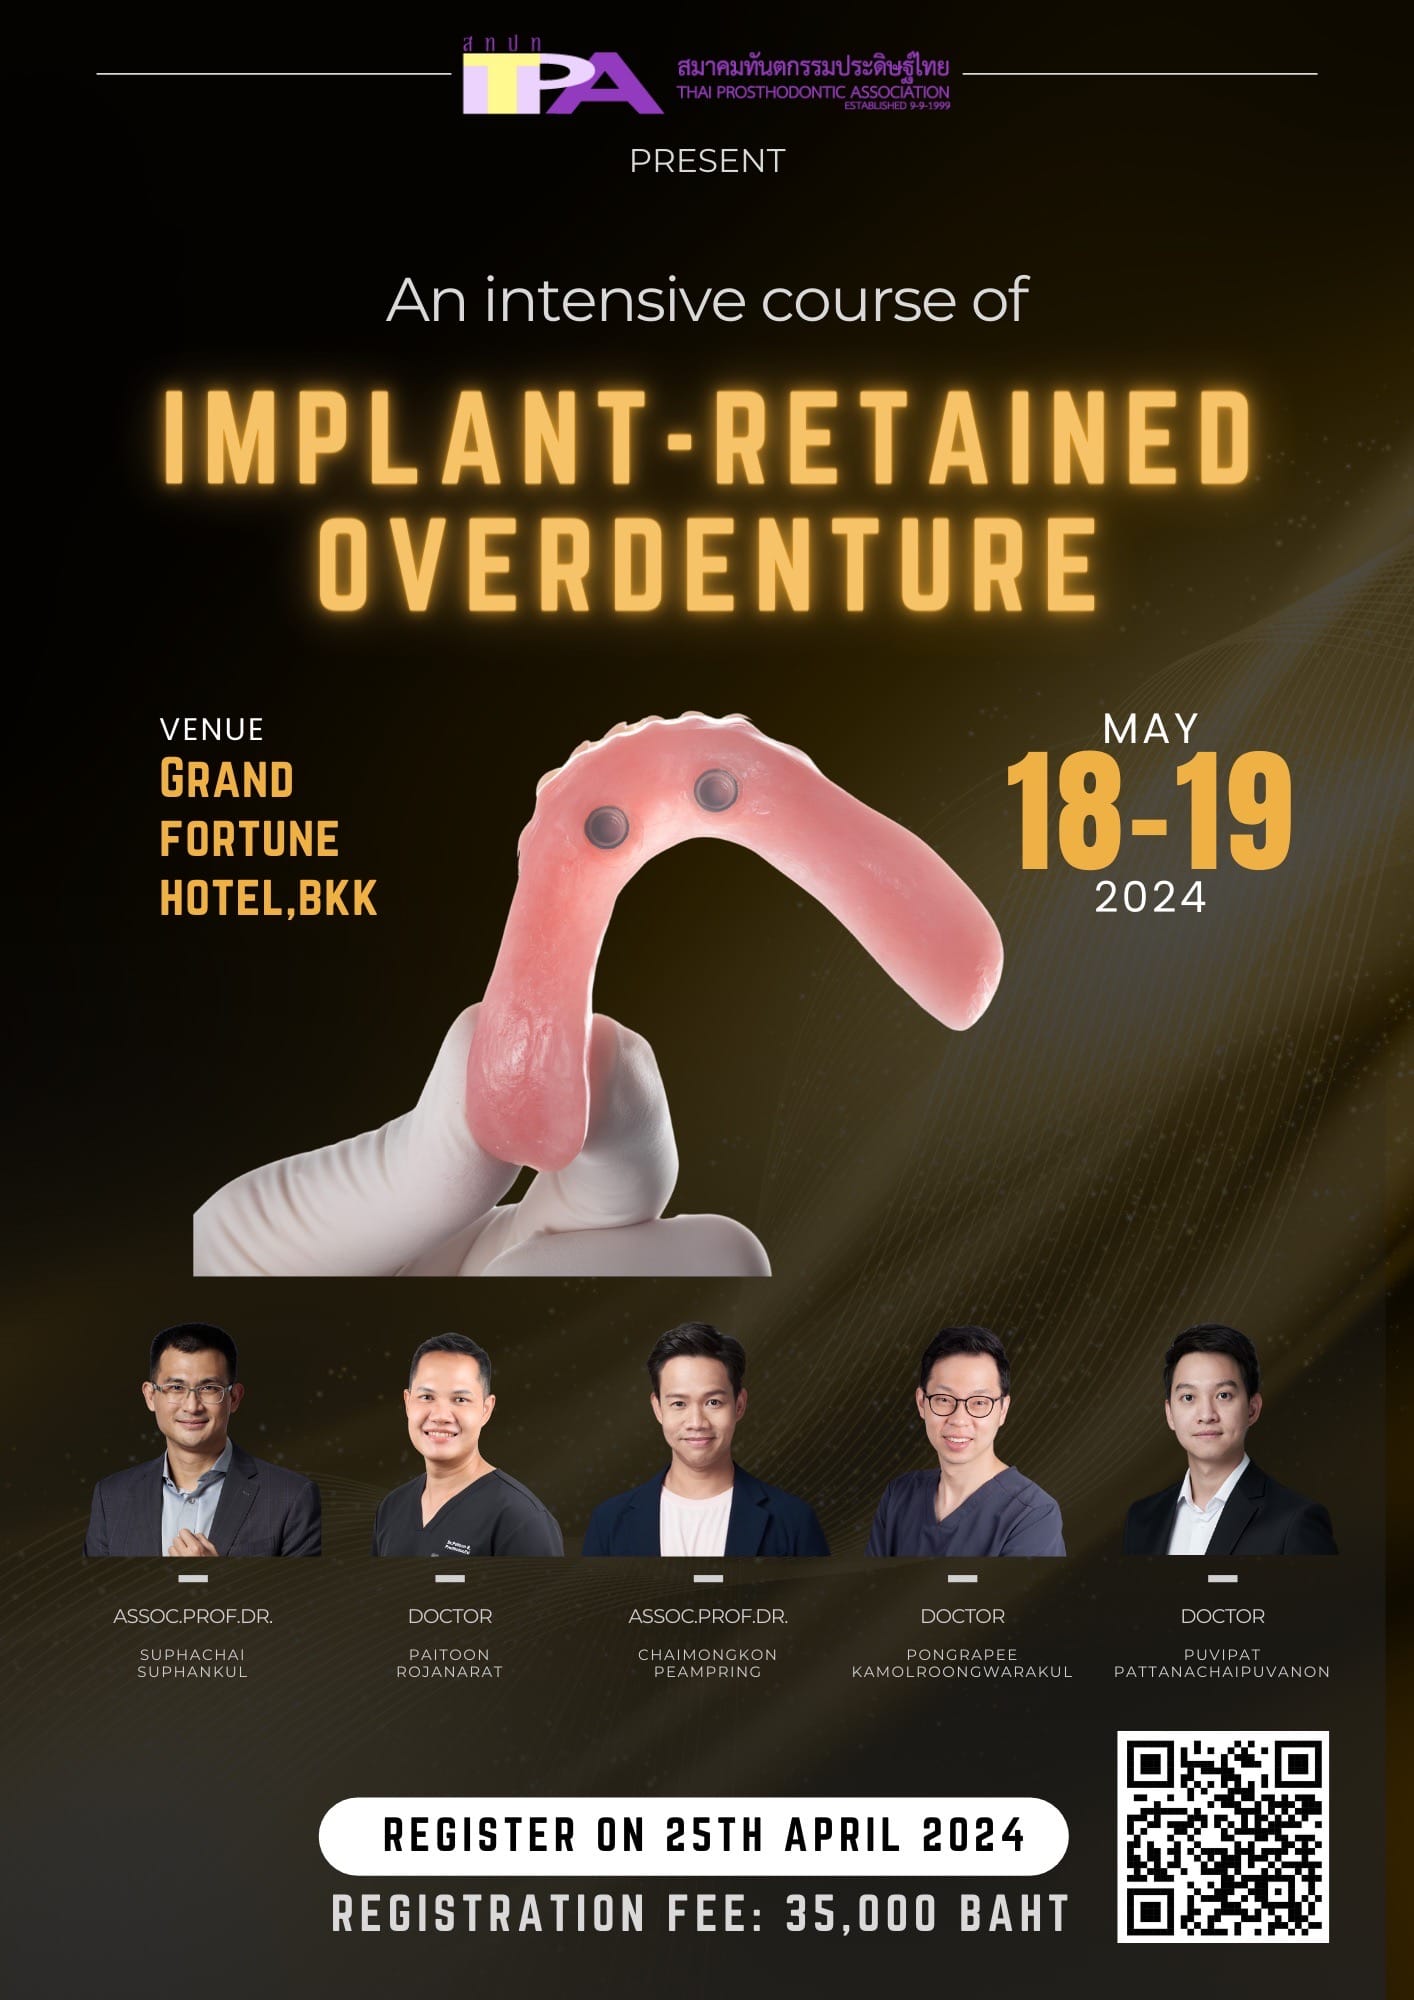 Implant-retained overdenture